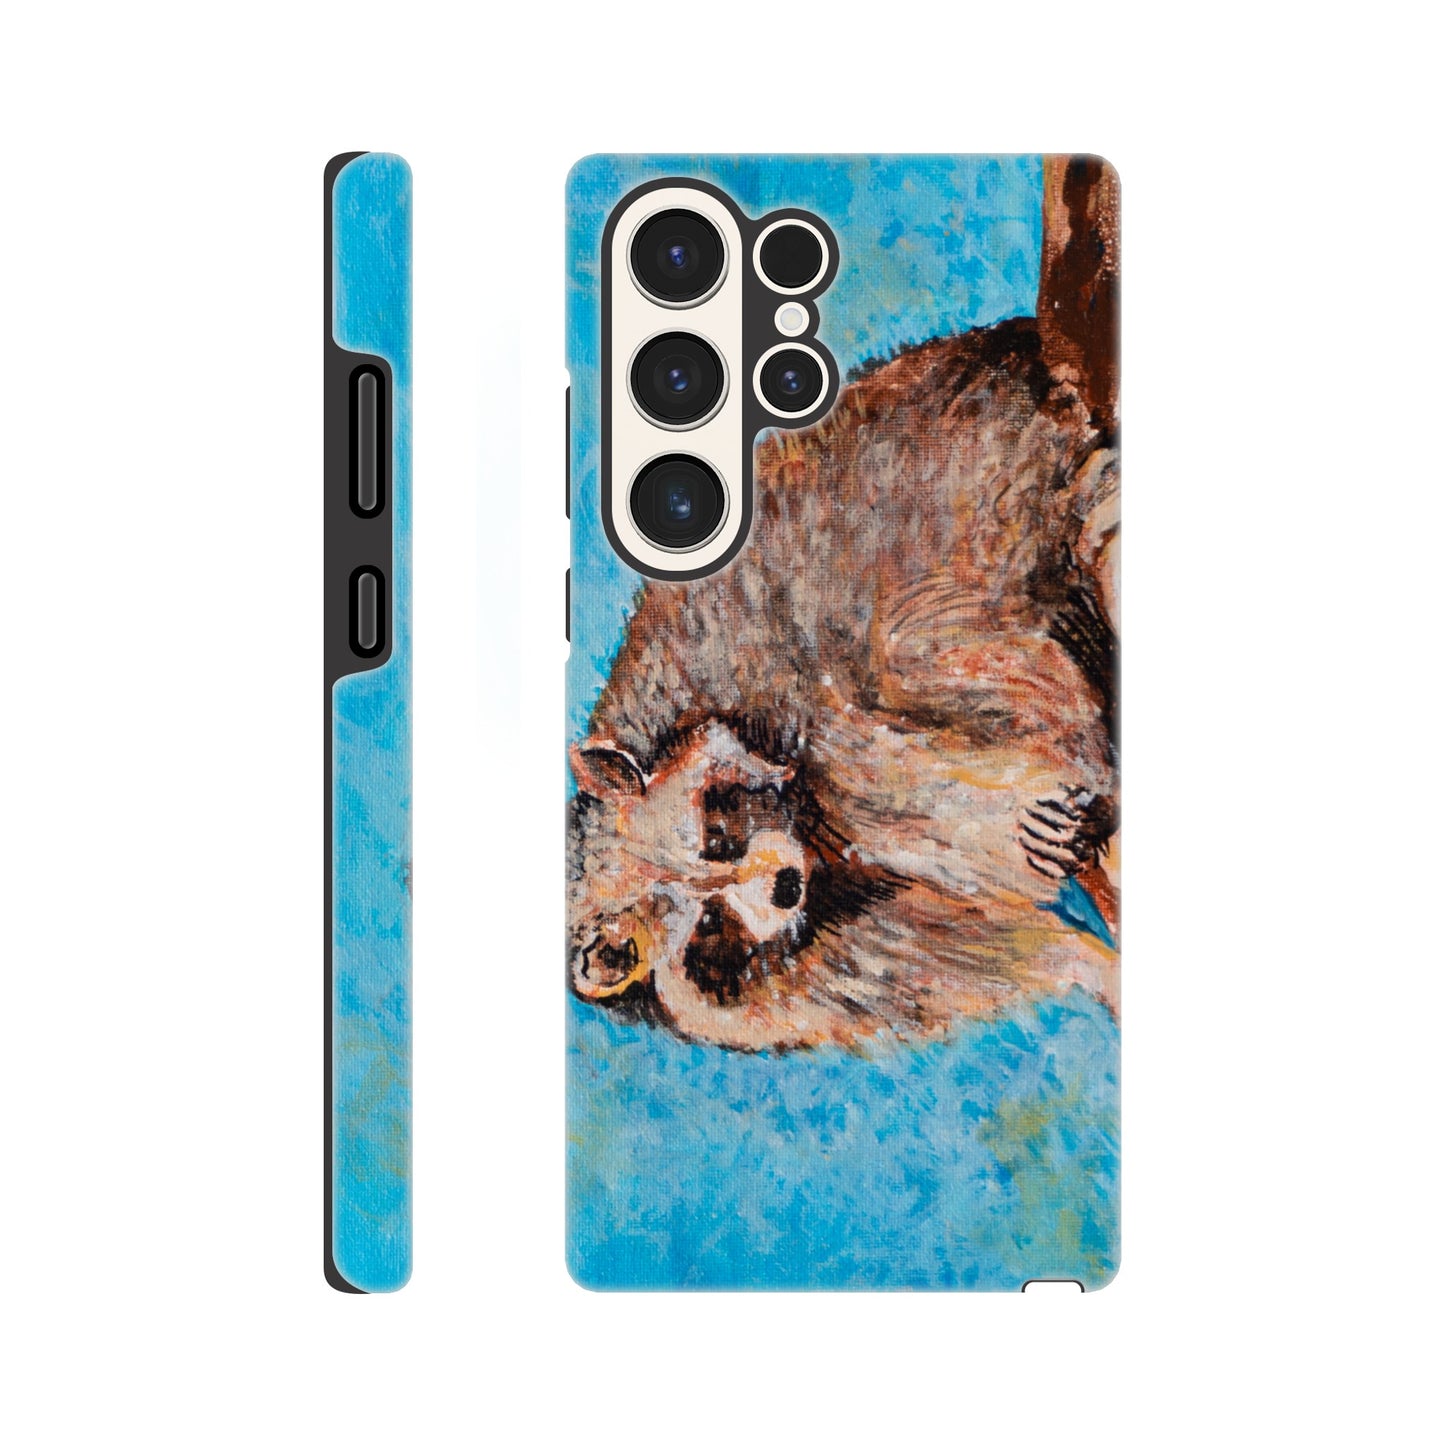 Big Raccoon - Phone cases